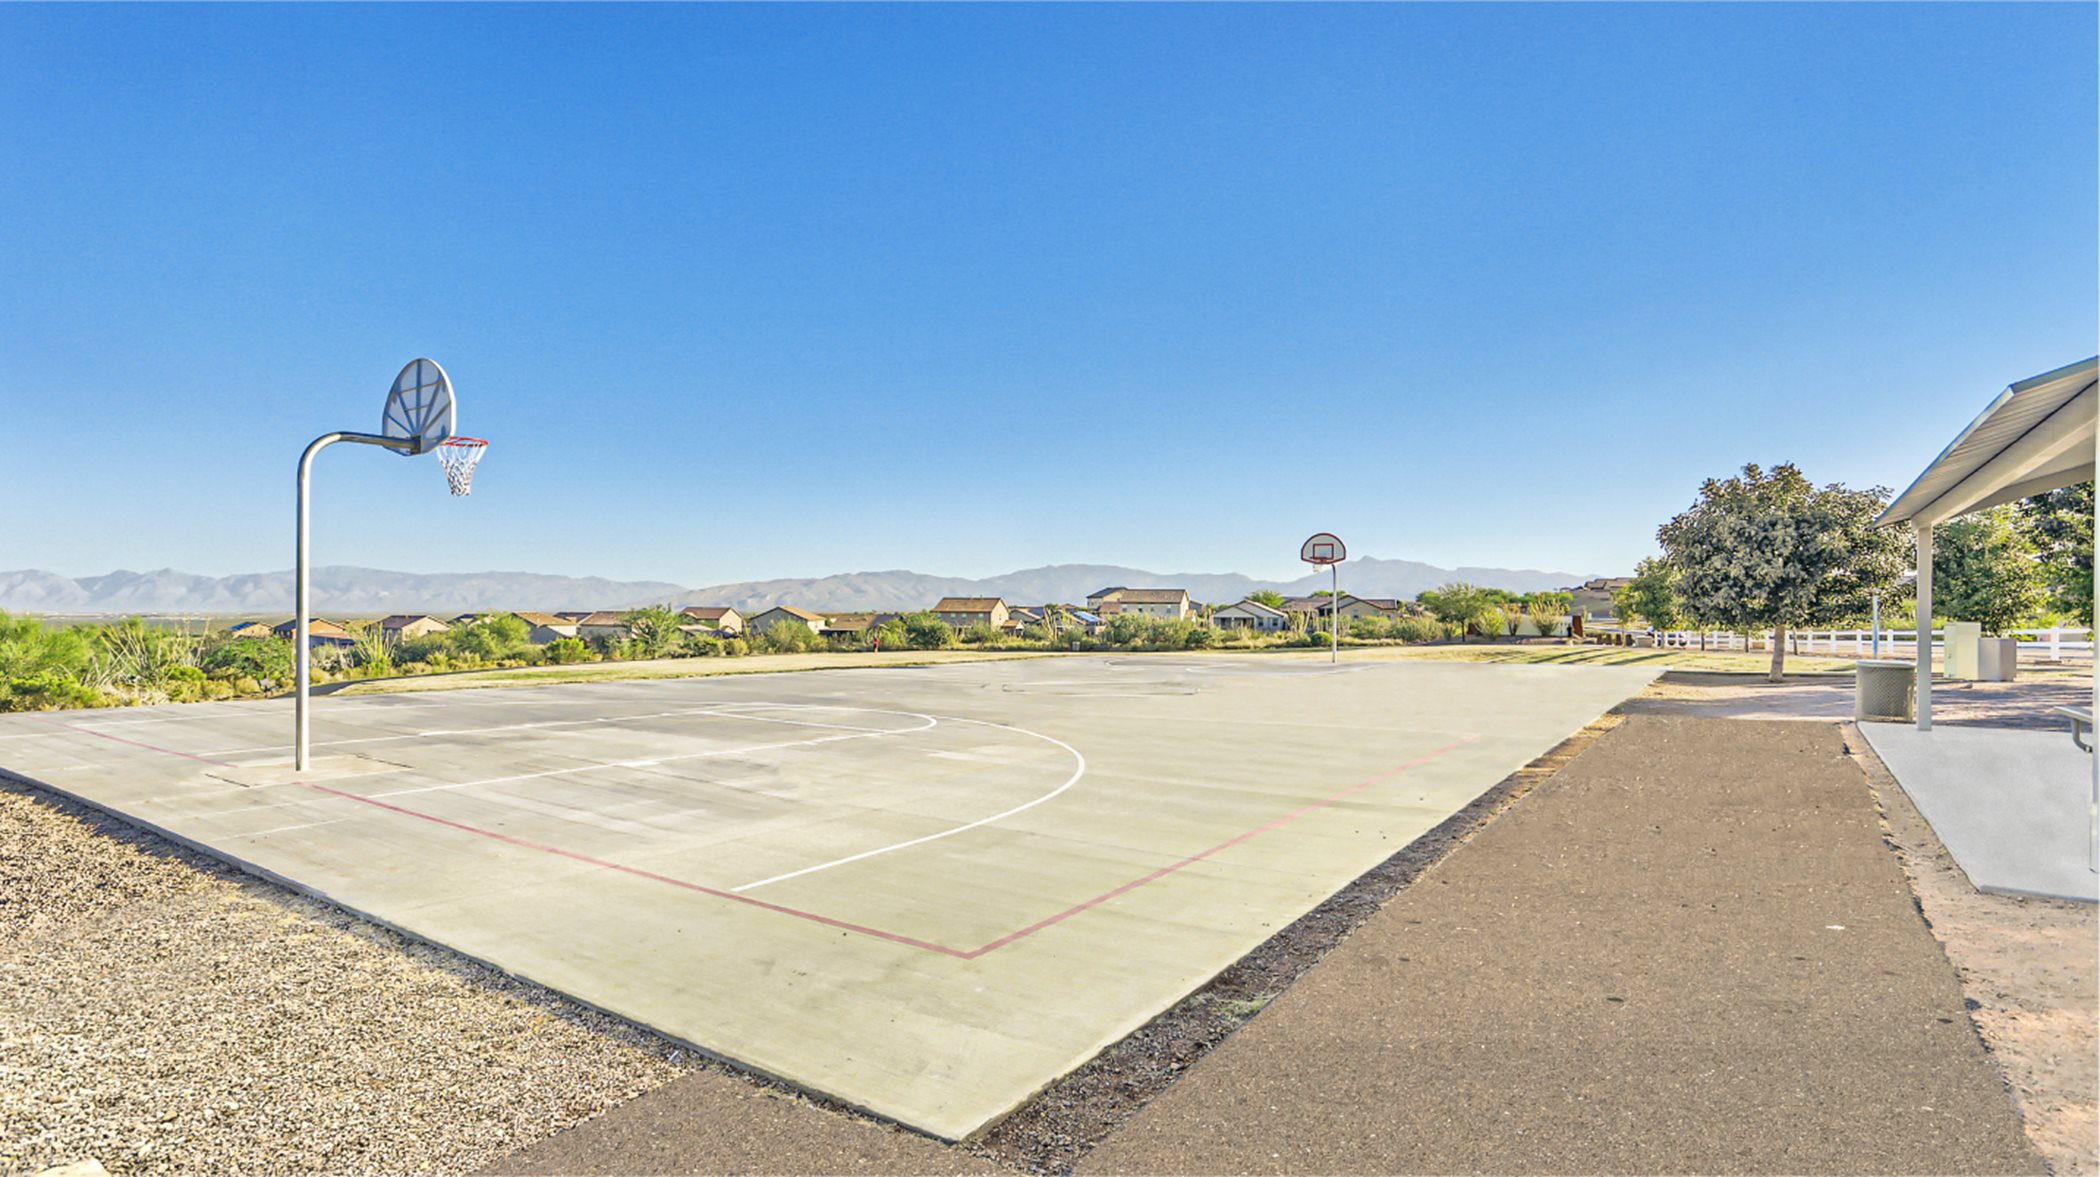 Santa Rita Ranch Basketball Court